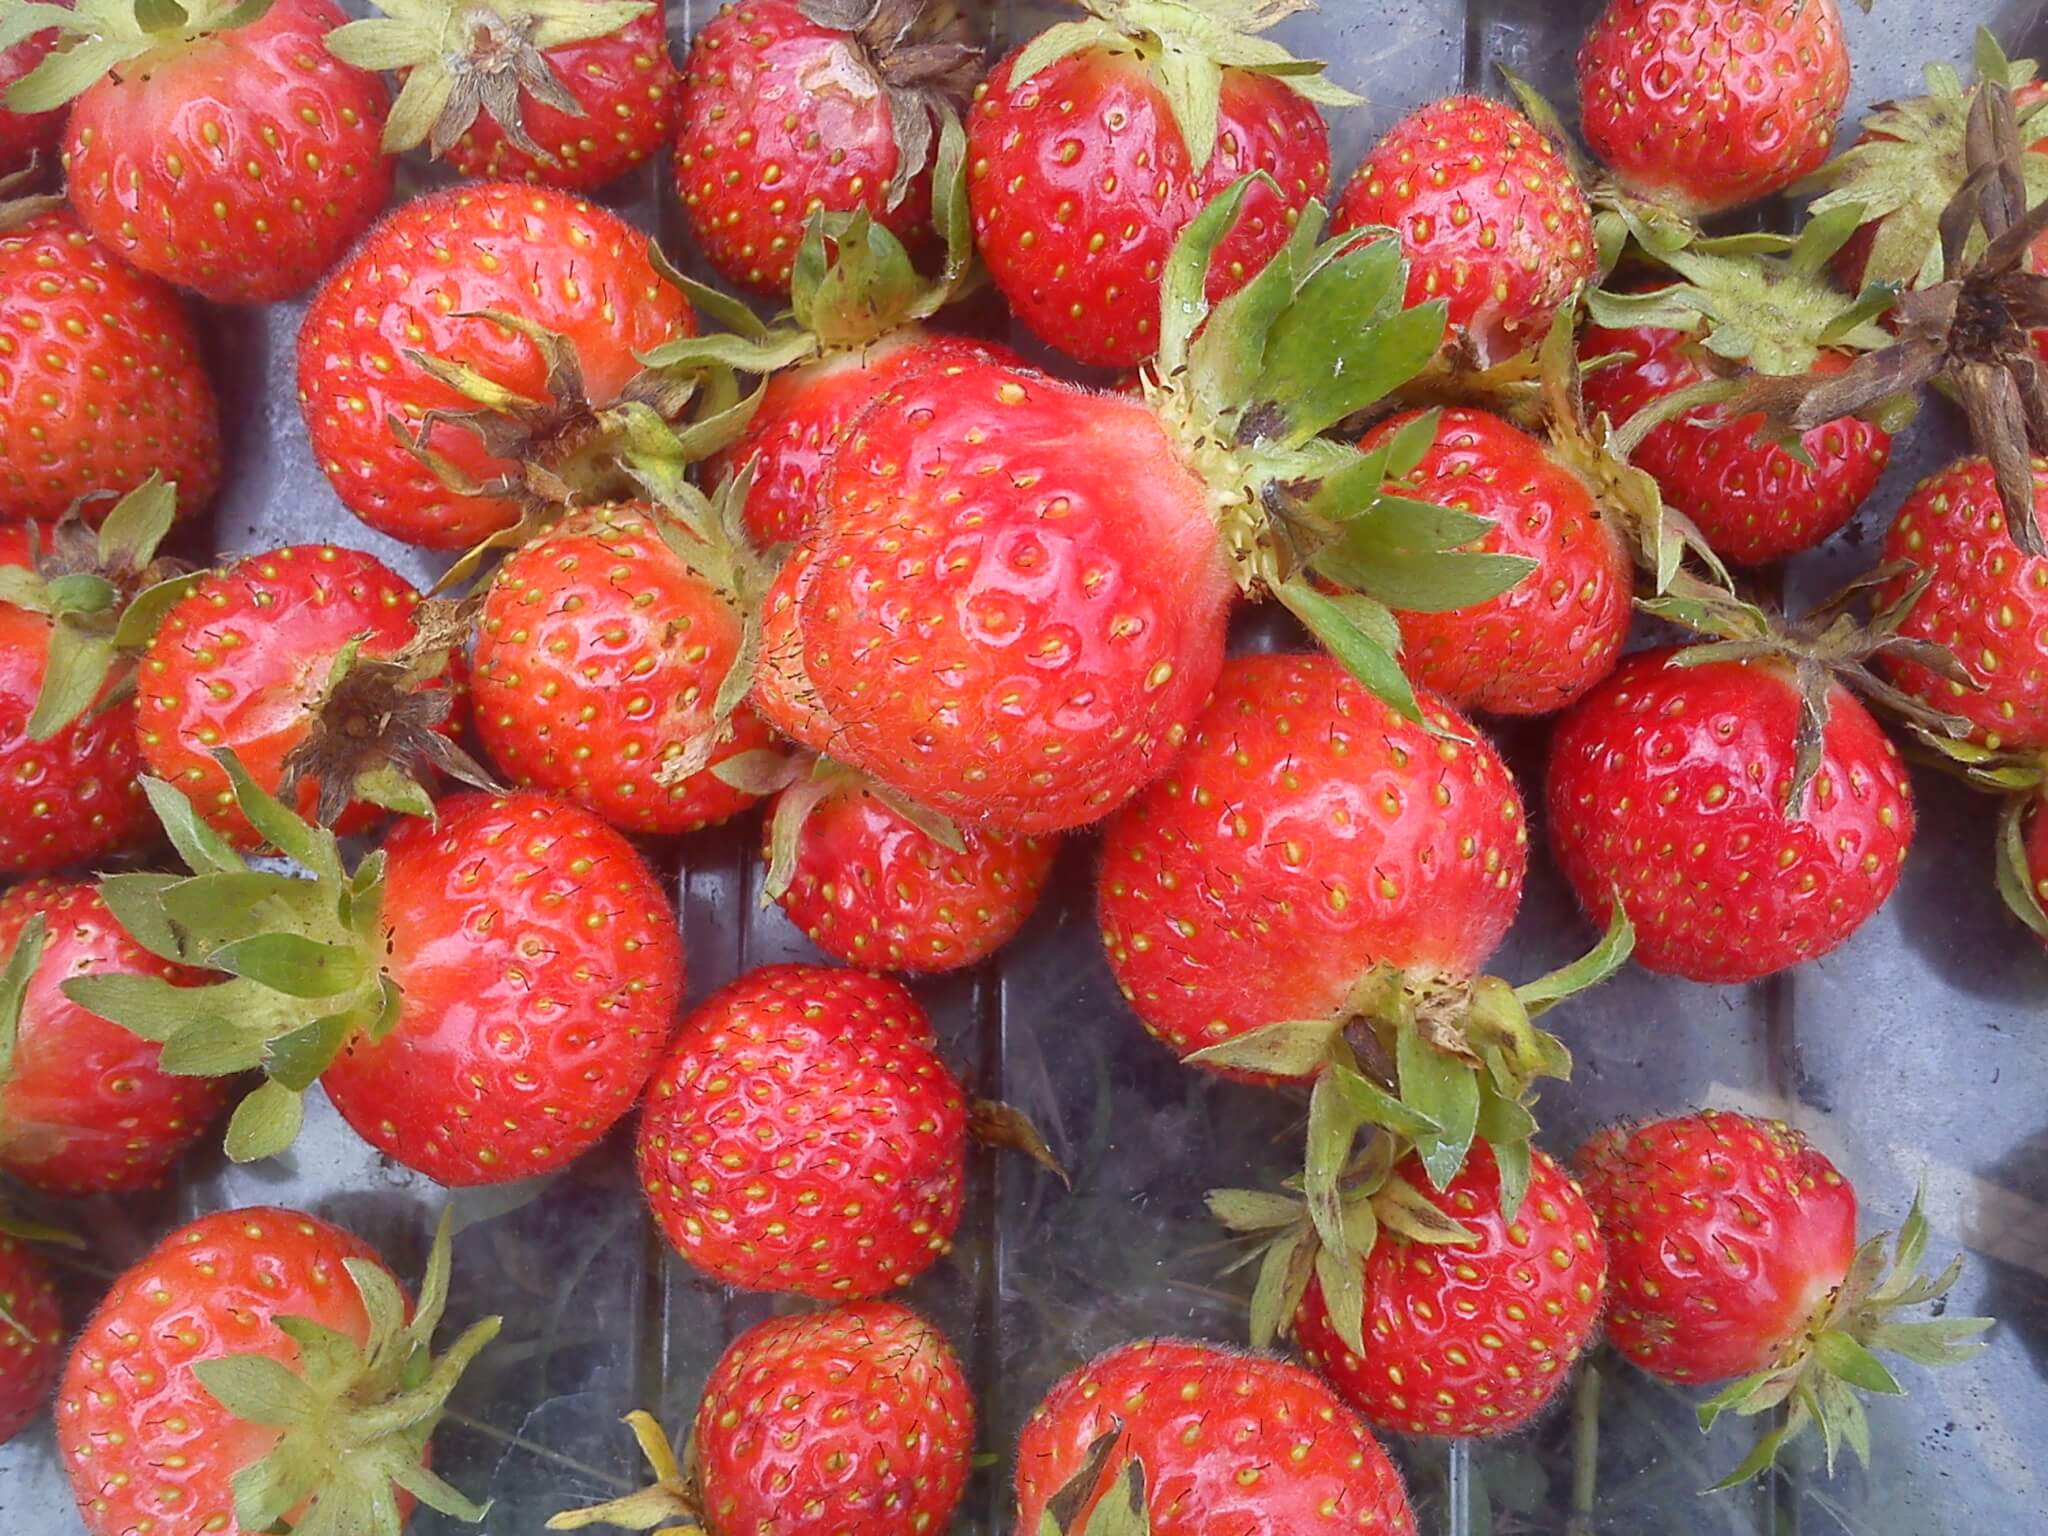 Craig's strawberry harvest